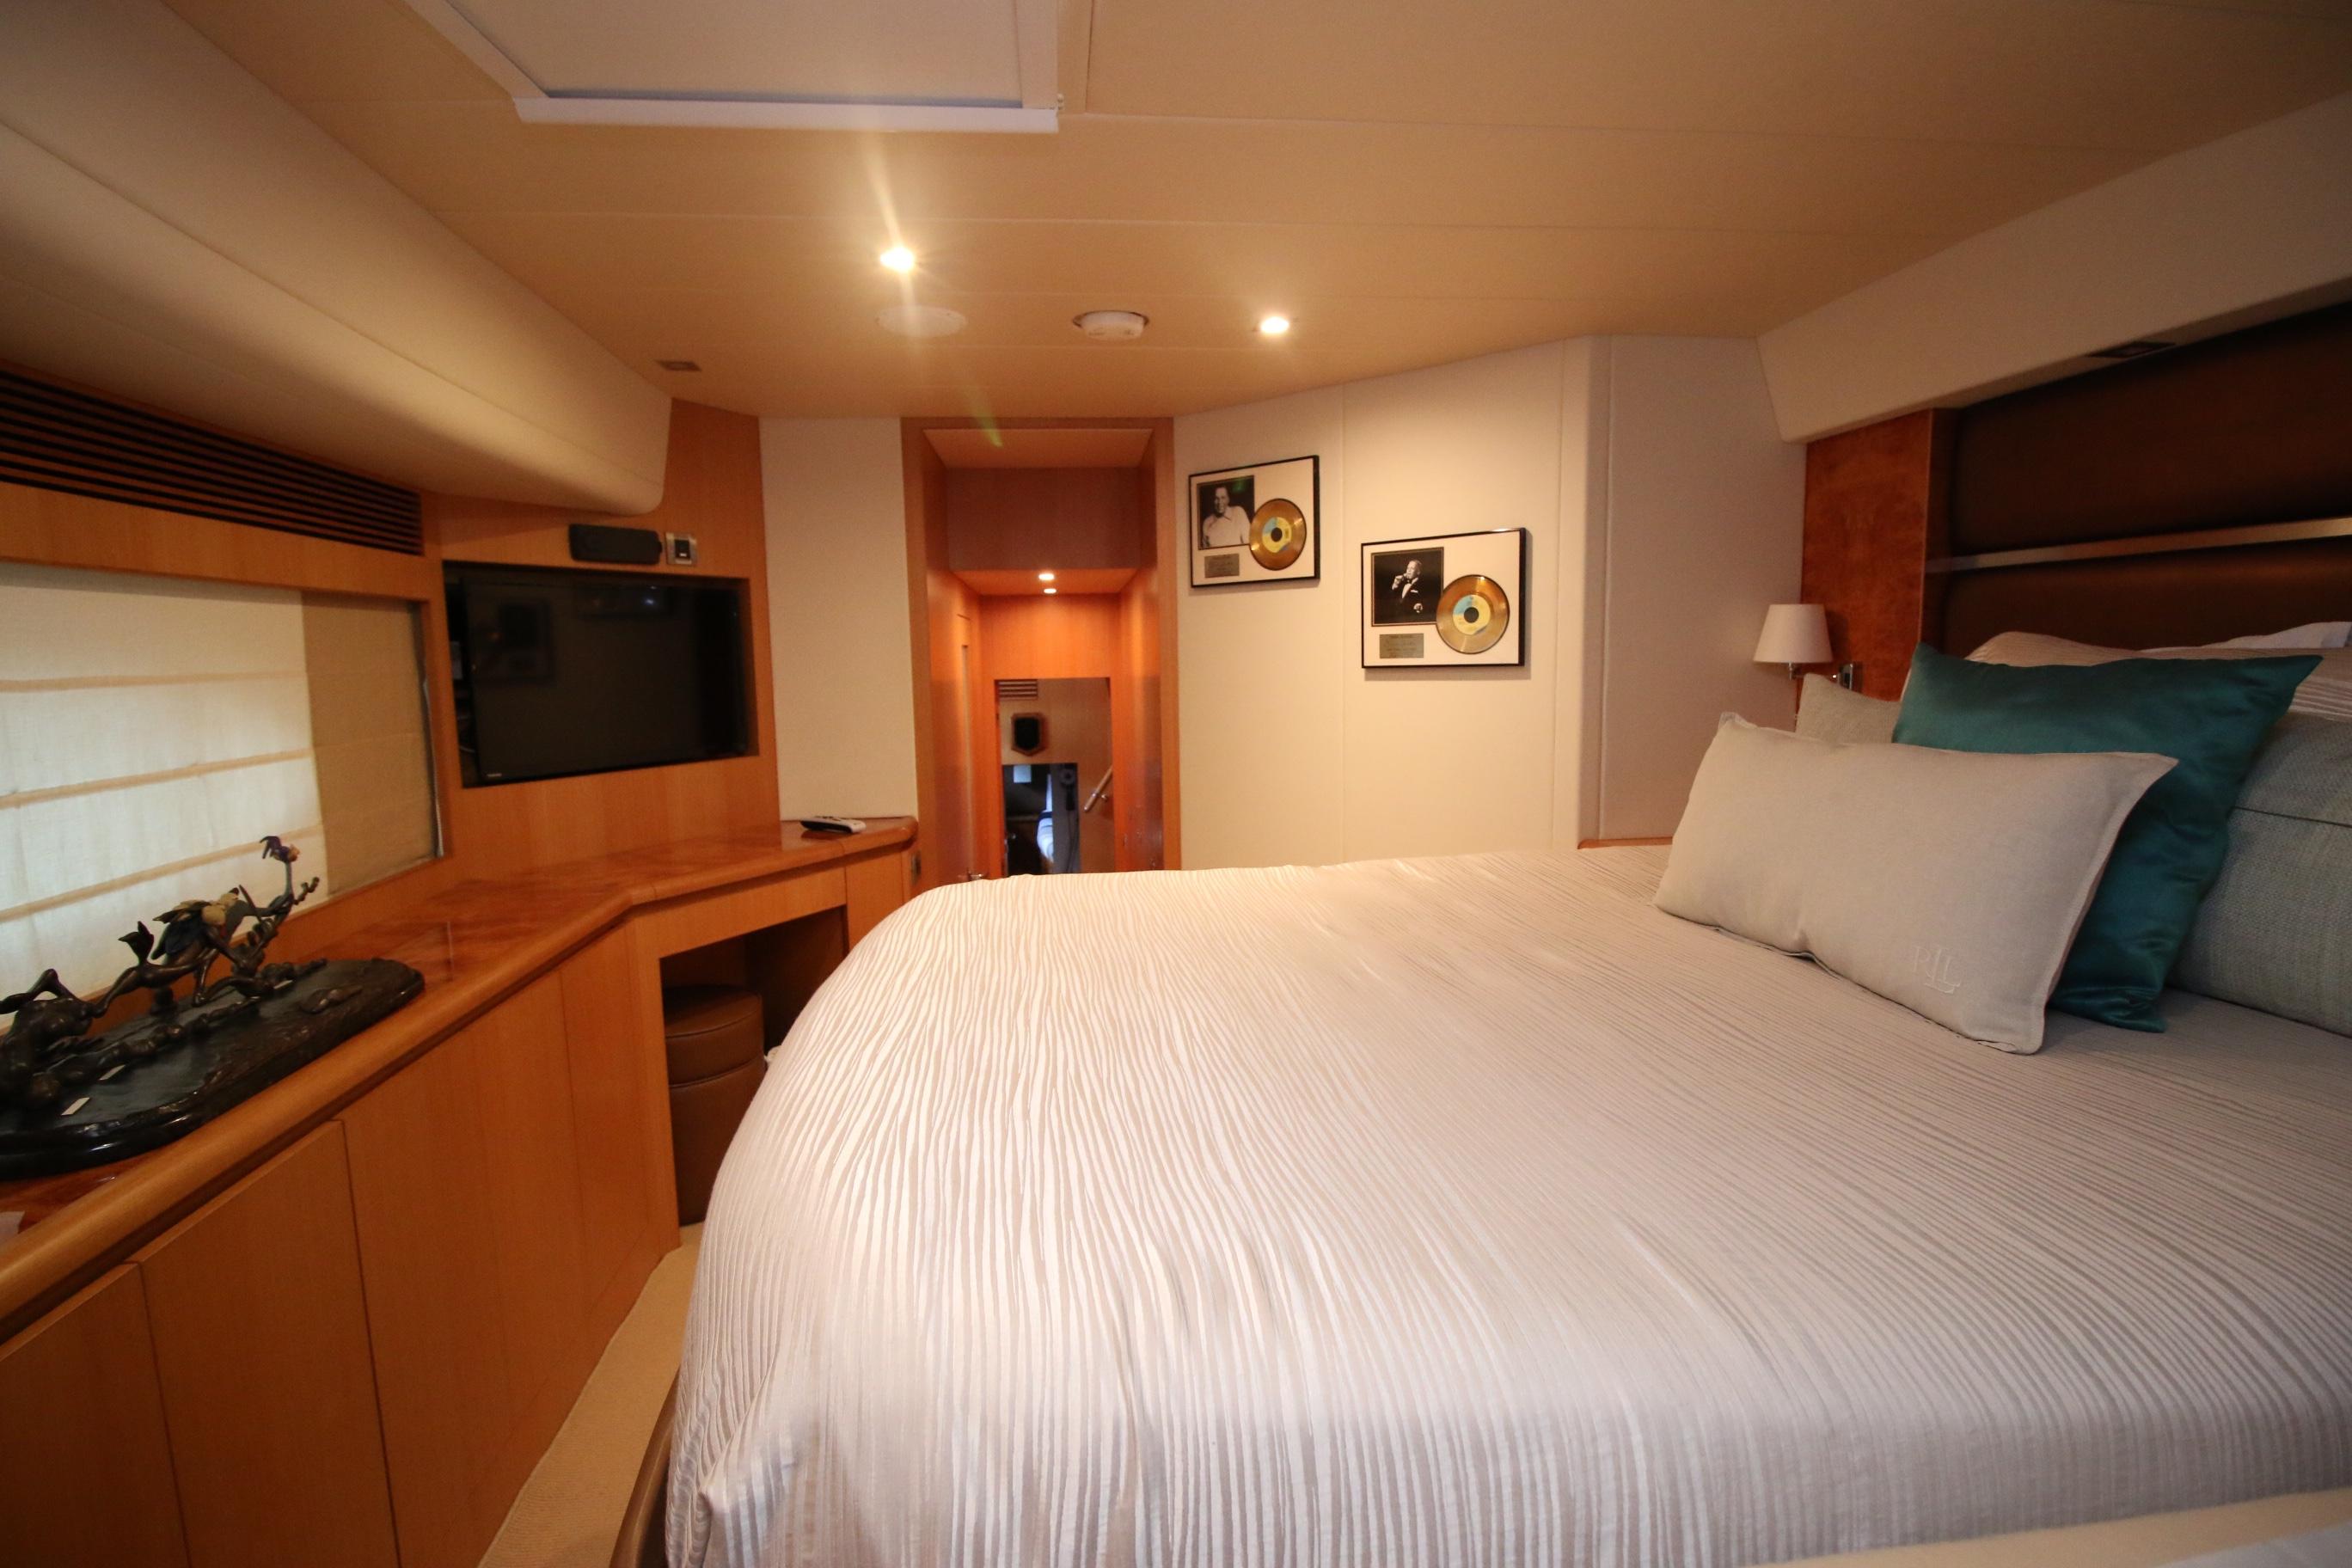 Used Power Catamaran for Sale 2014 Horizon PC60 Layout & Accommodations